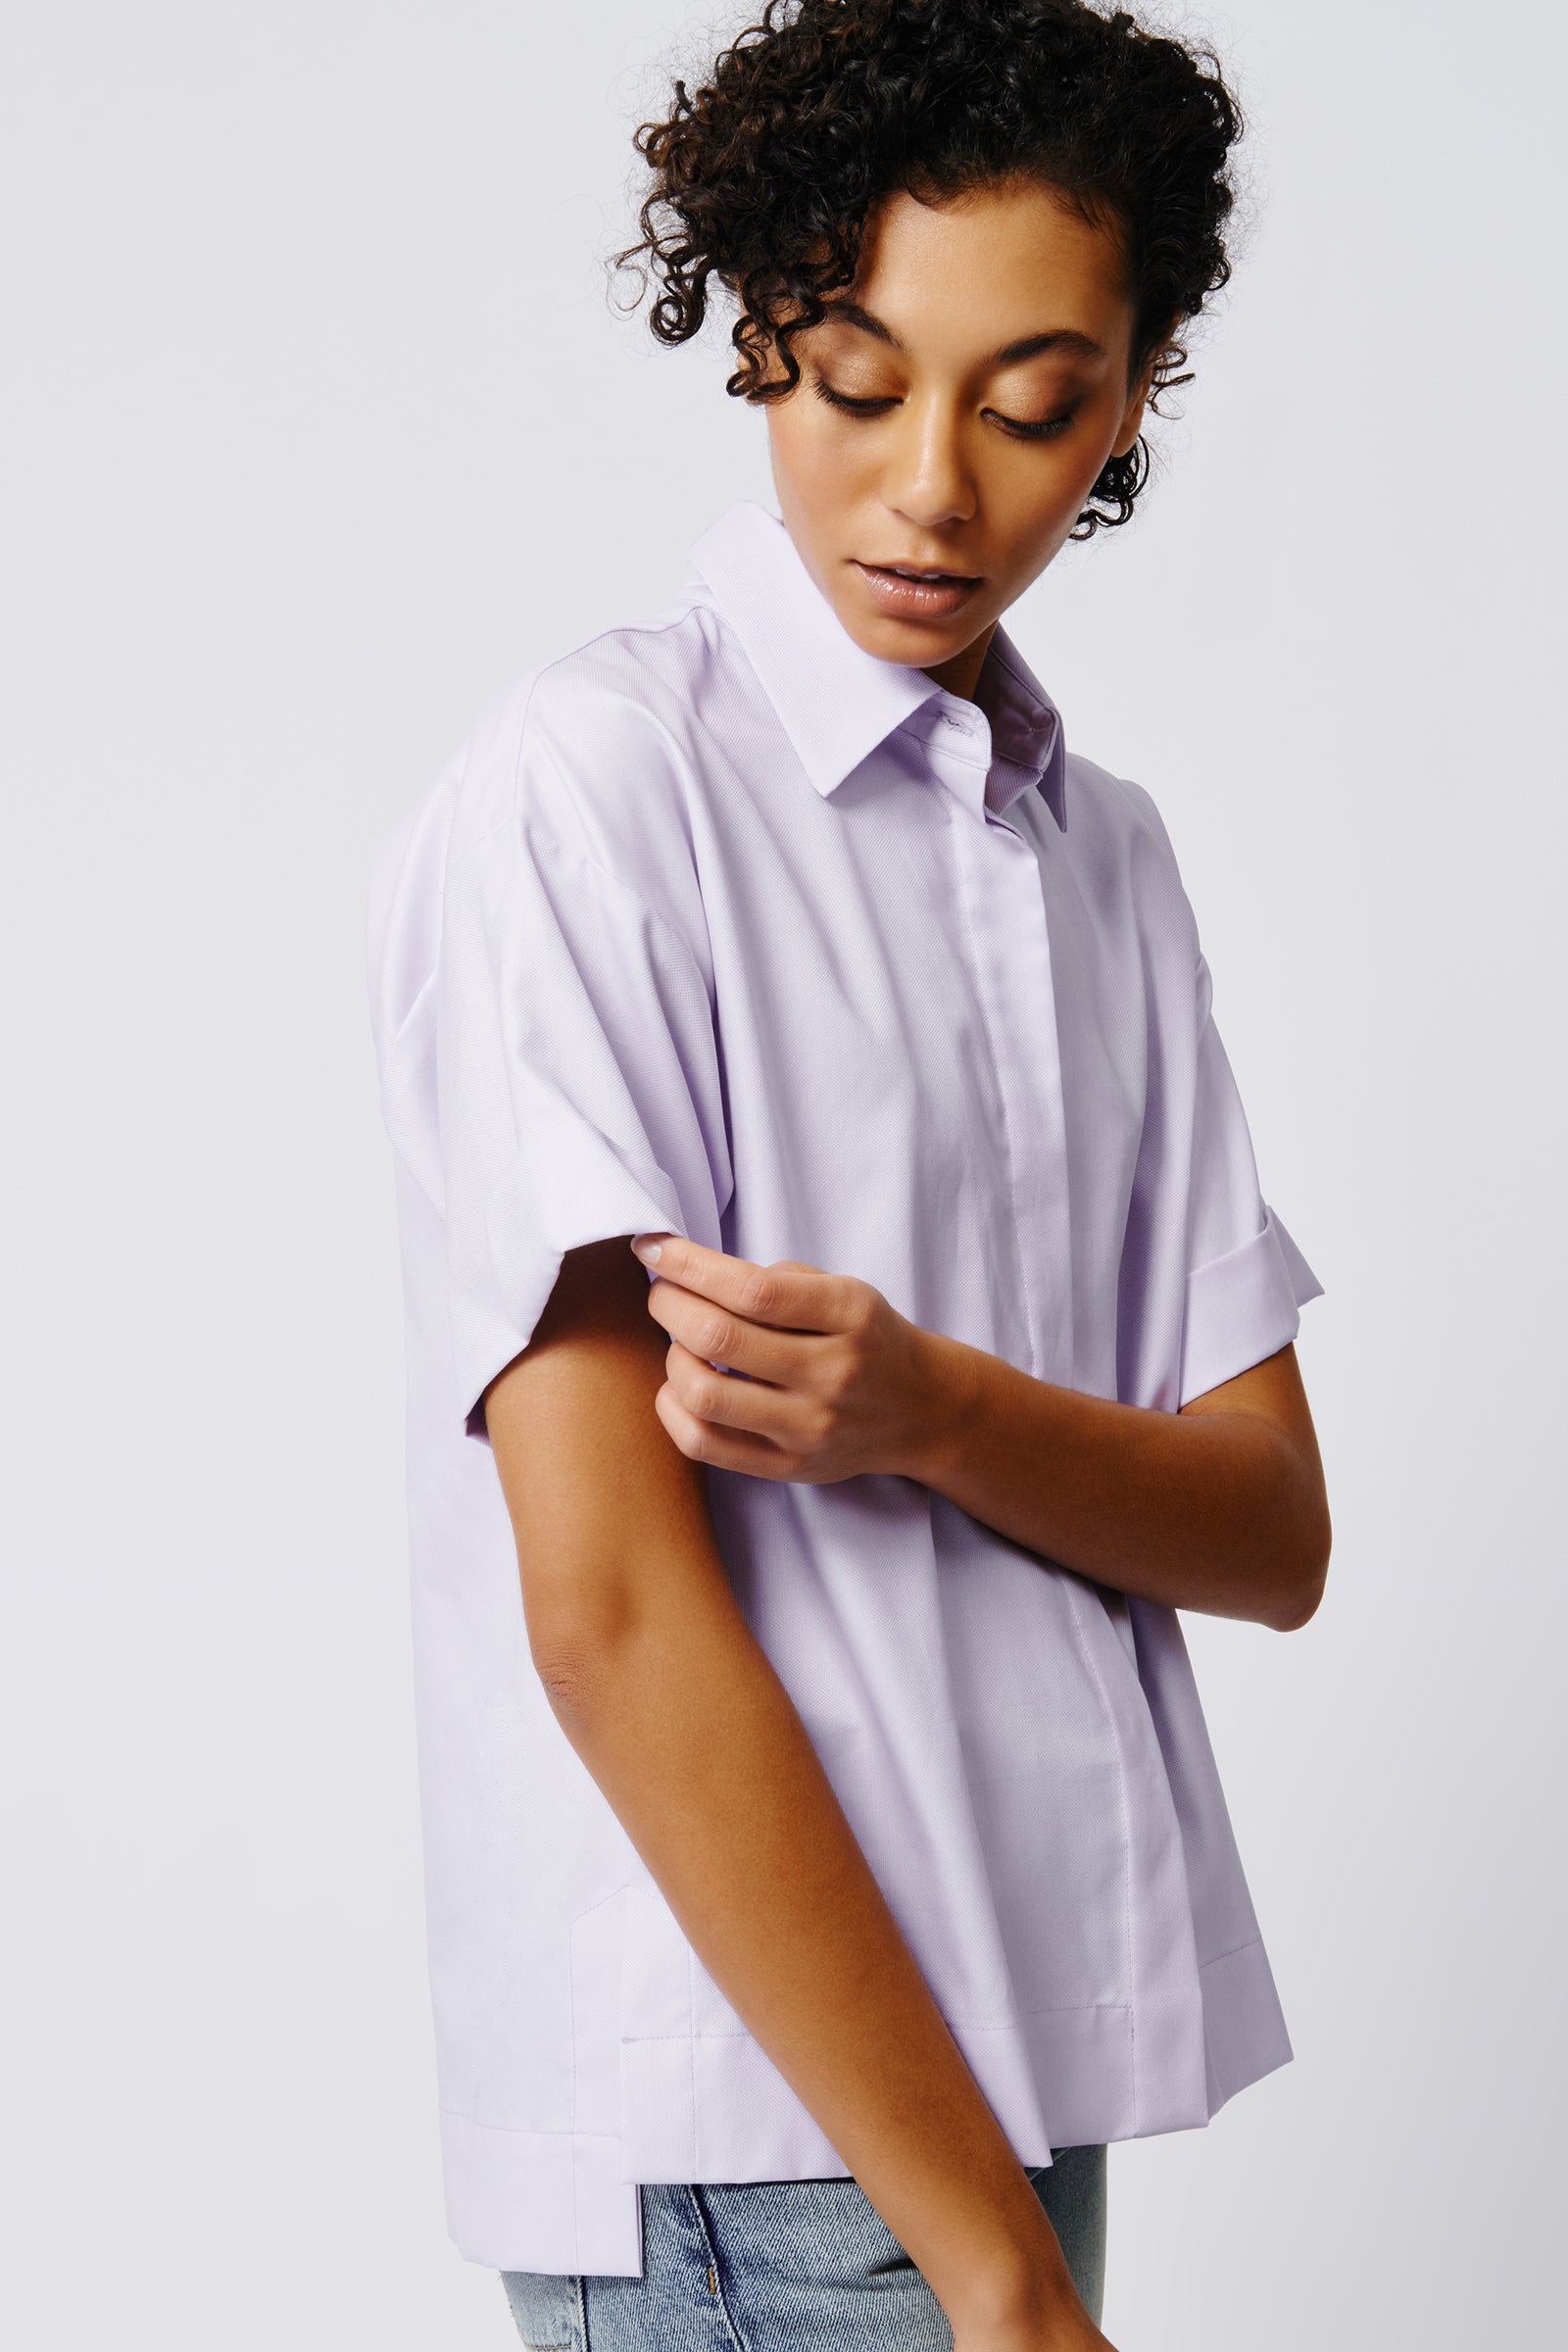 Kal Rieman Billie Cuffed Short Sleeve Shirt in Lavender on Model Side View Crop